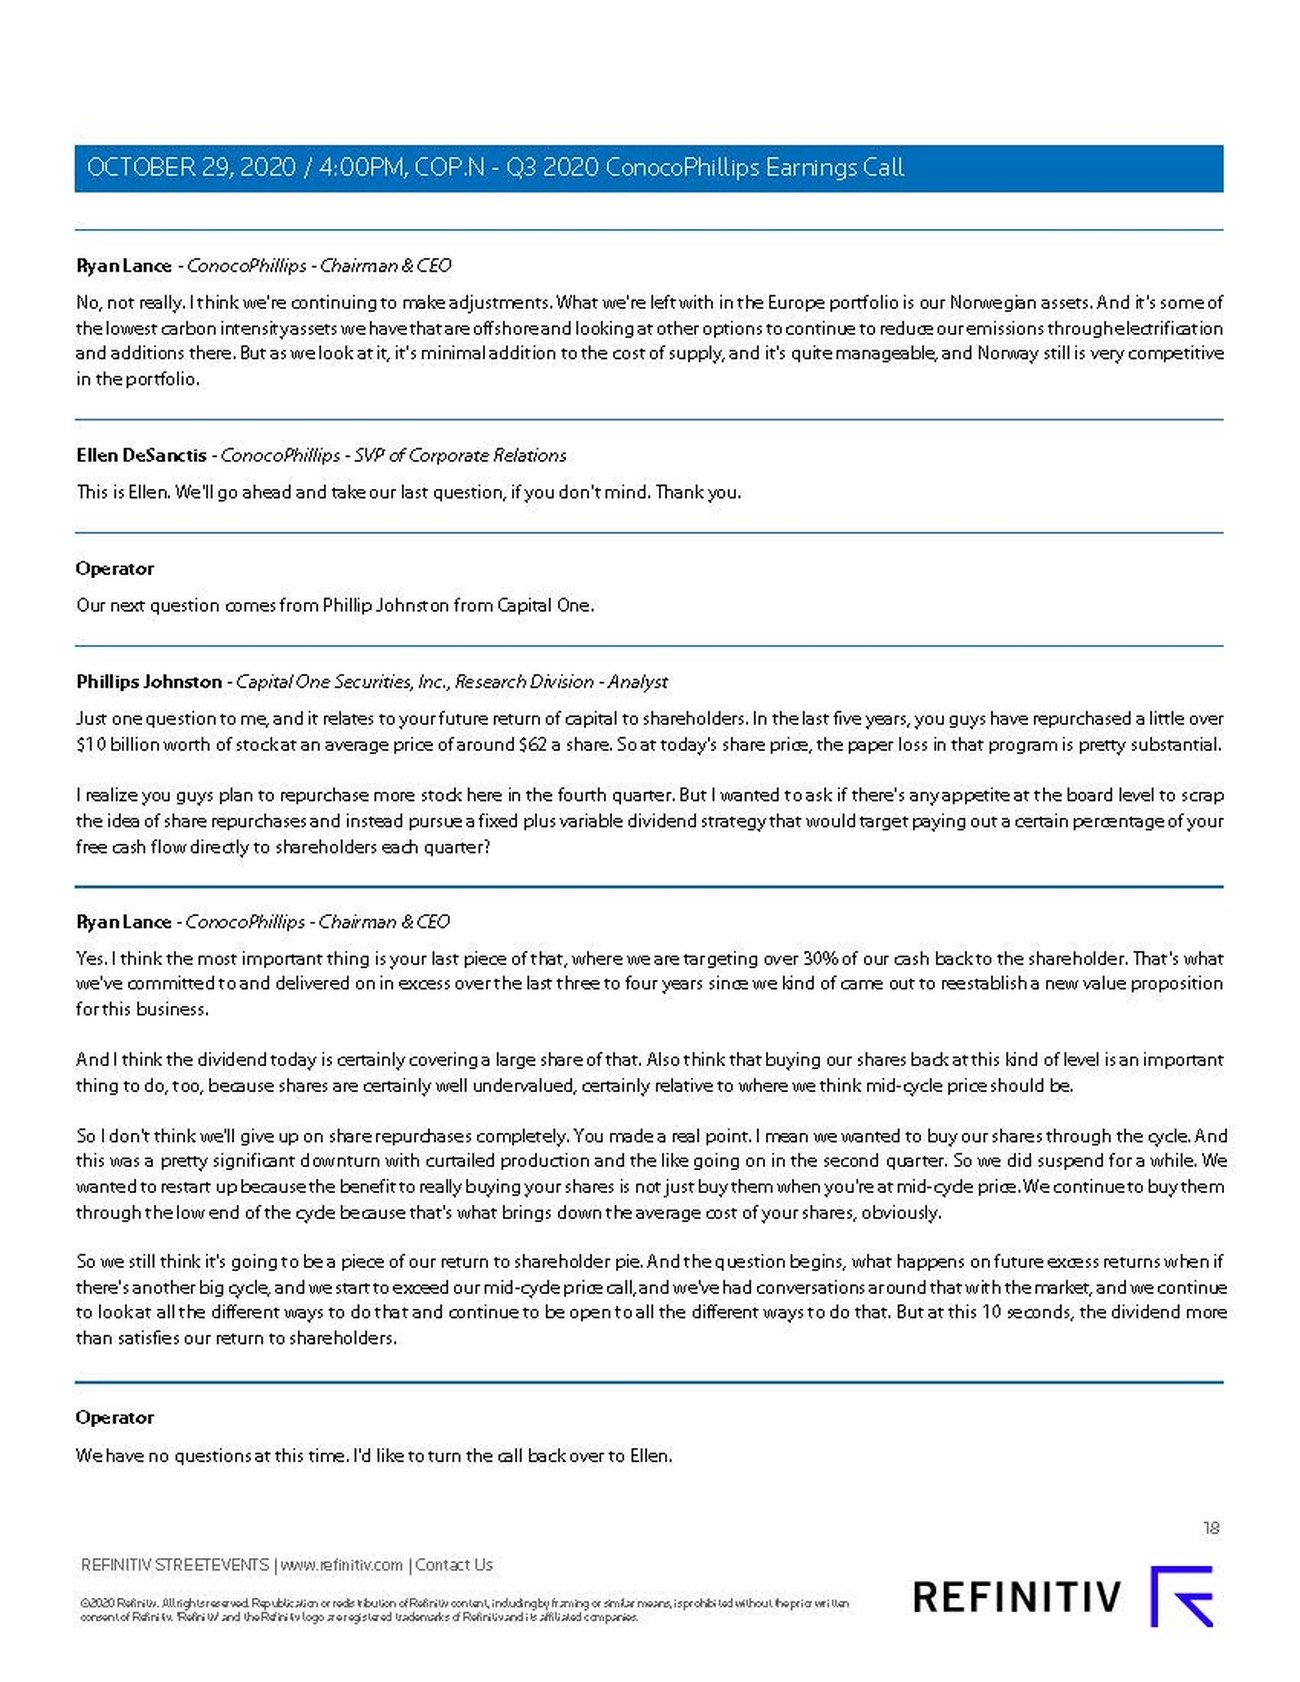 New Microsoft Word Document (2)_cop-usq_transcript_2020-10-29_page_18.jpg